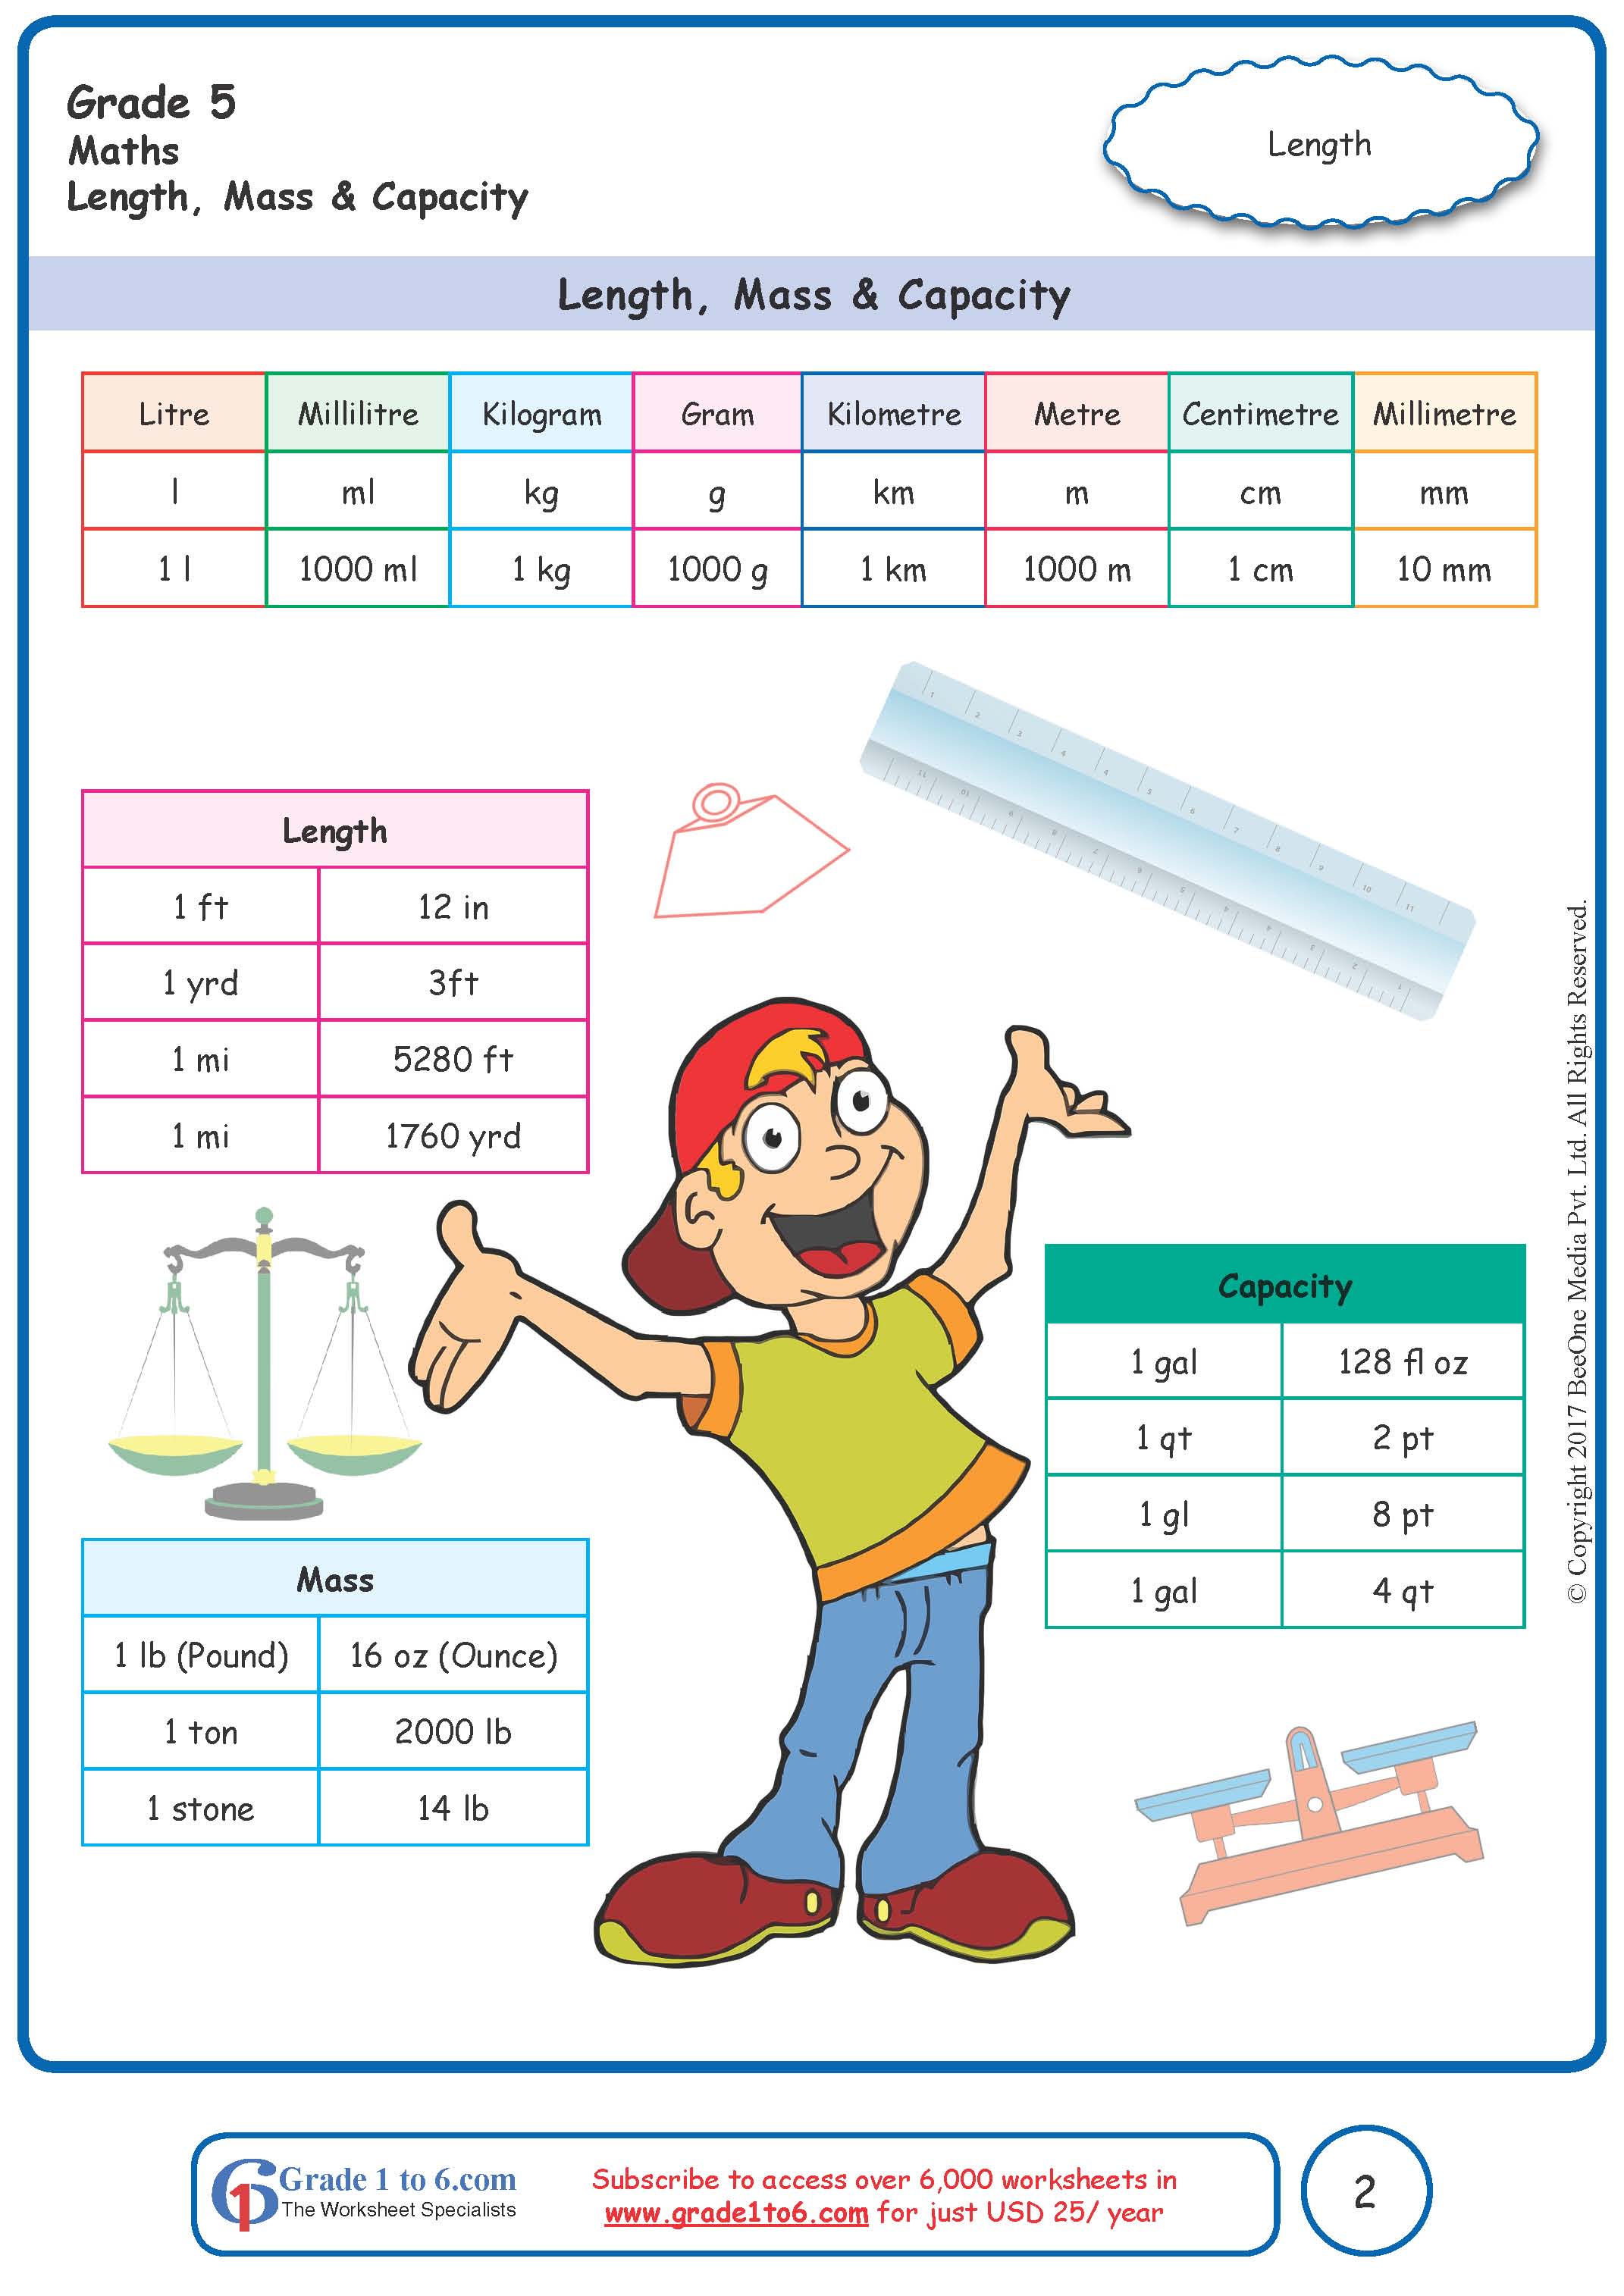 measurement-conversion-chart-for-kids